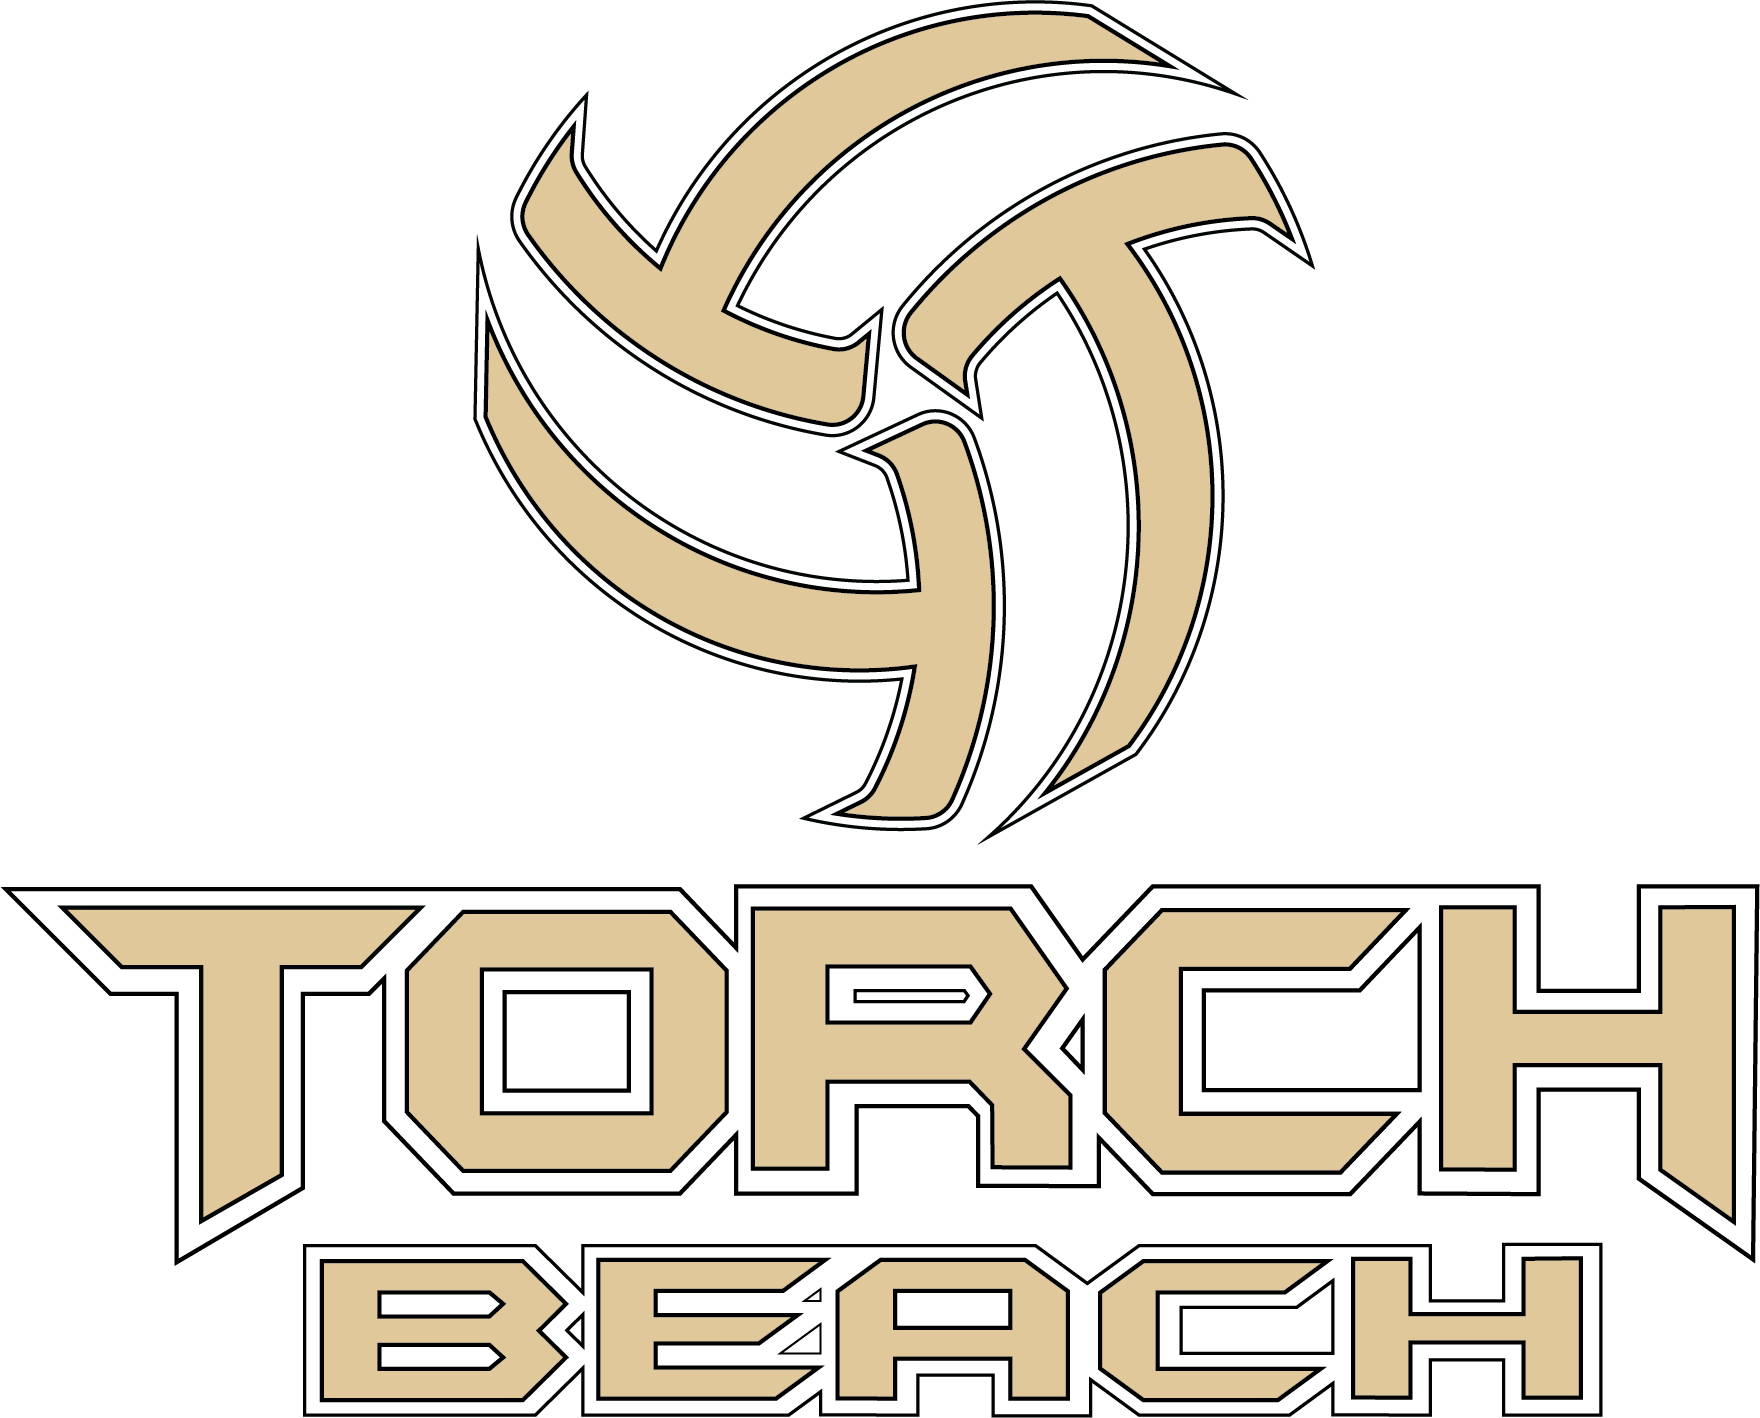 Torch Beach Volleyball